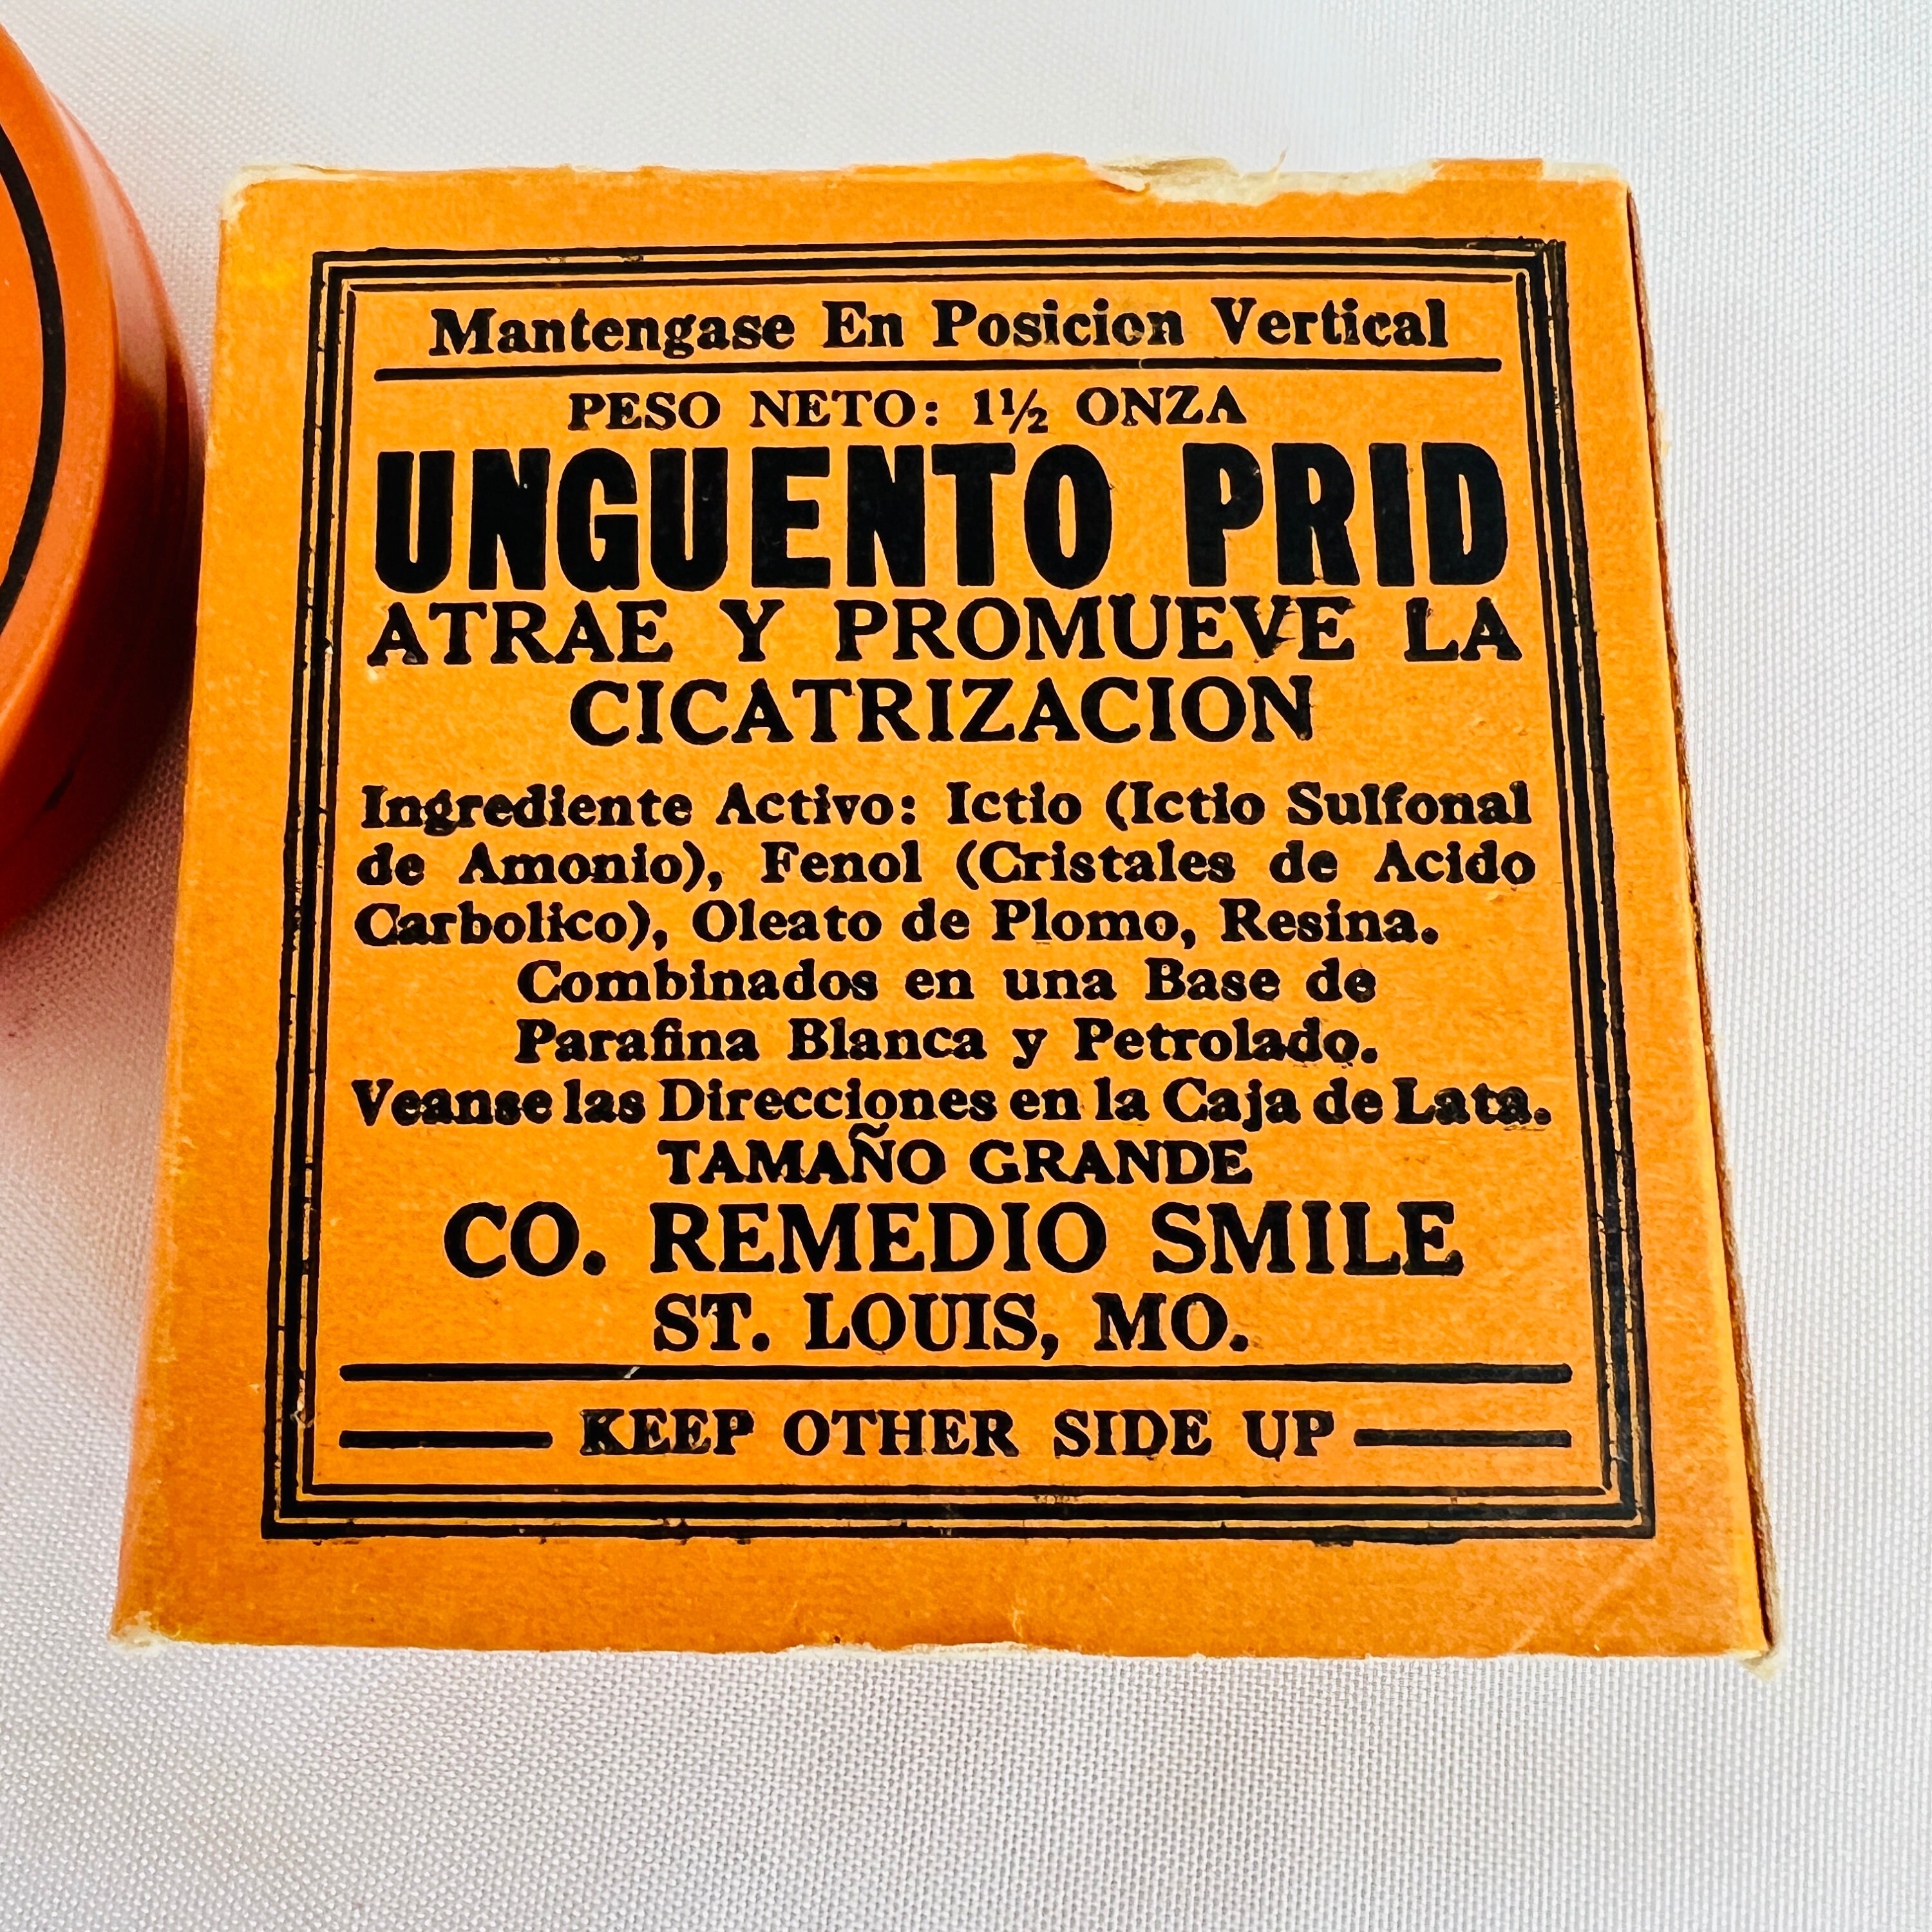 Vintage Smiles PRID Salve Tin Walker Pharmaceutical Original